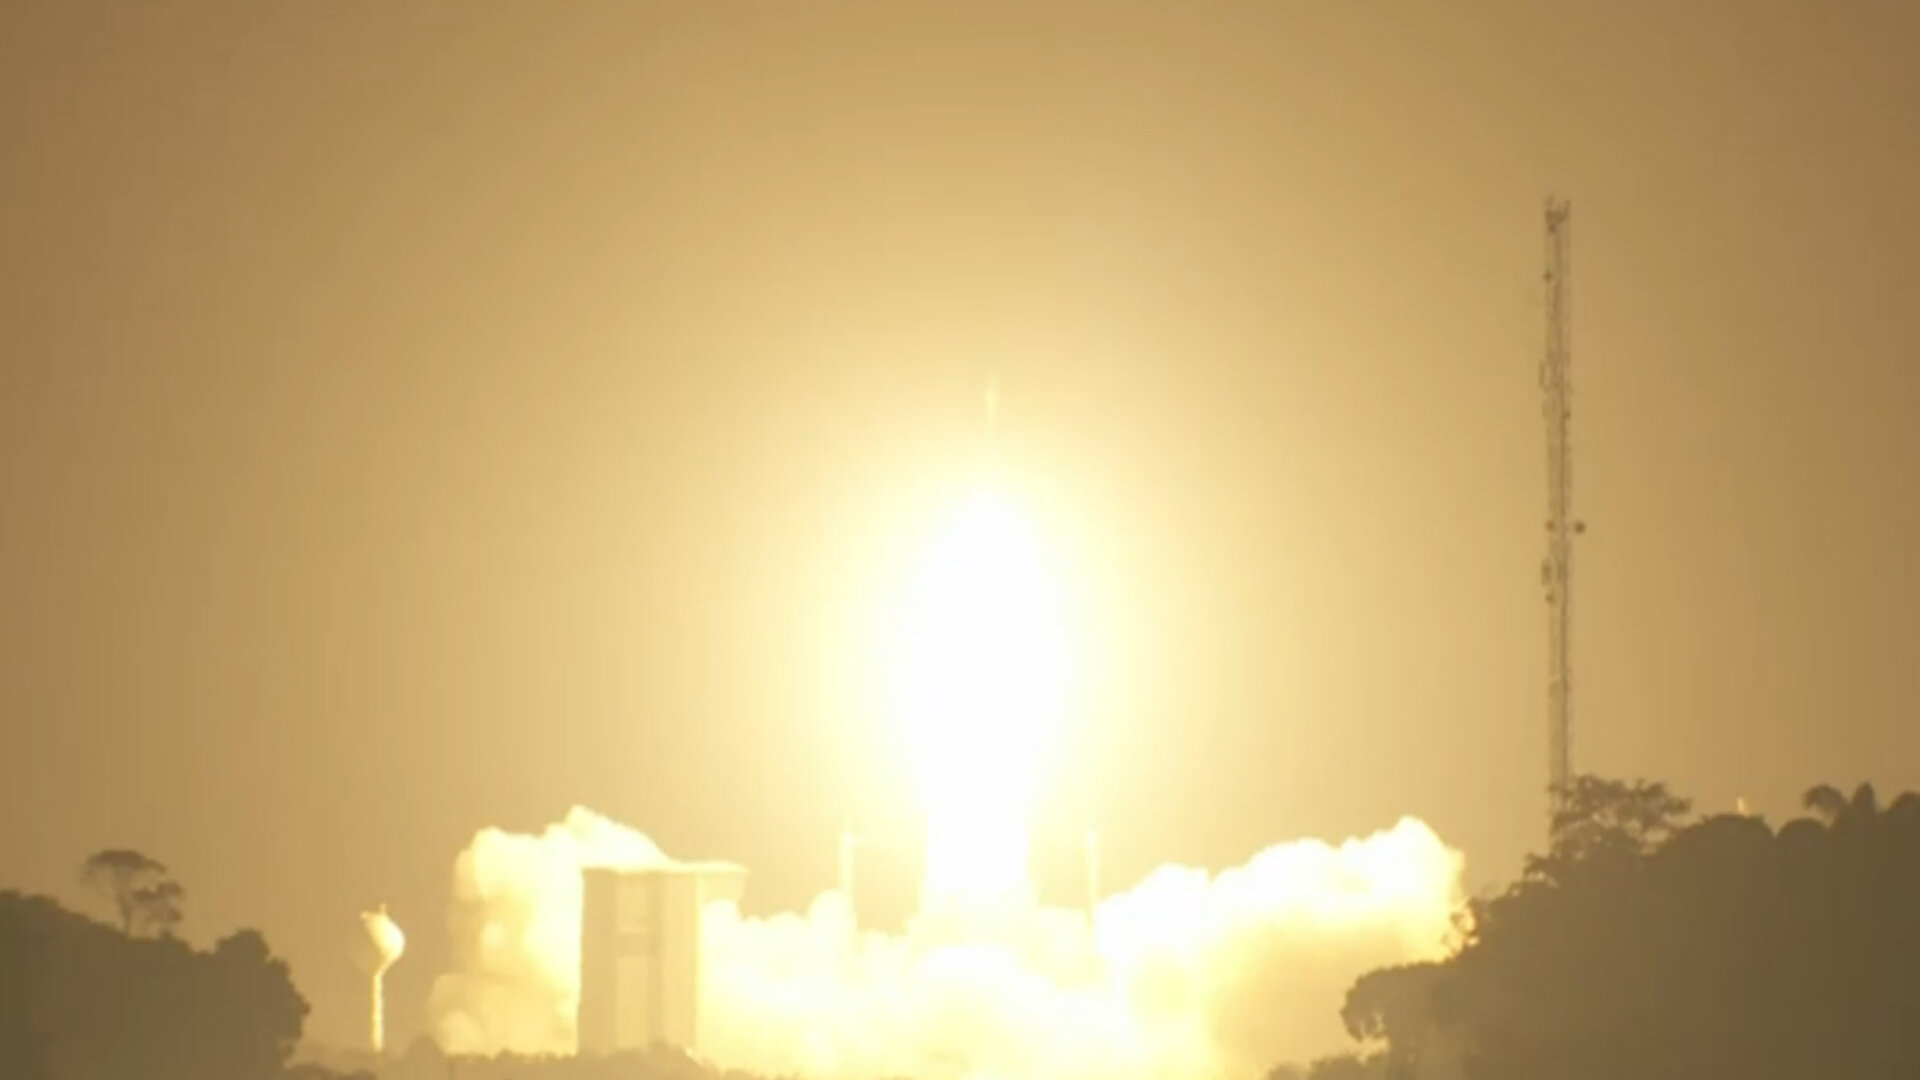 Sentinel-2A liftoff